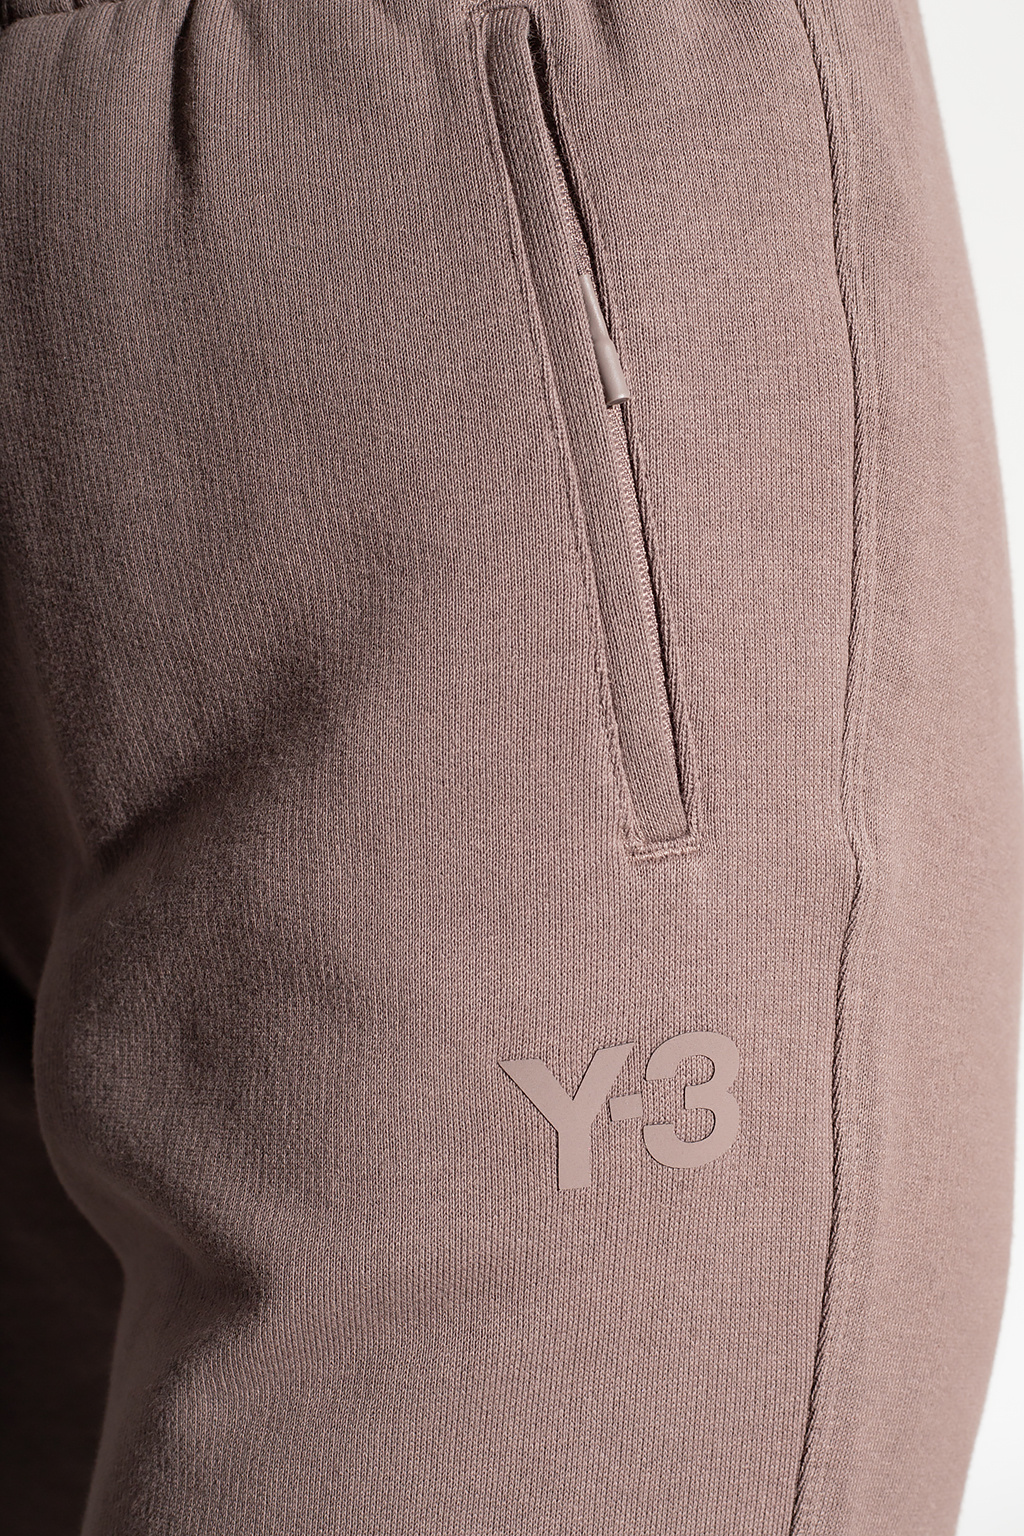 Y-3 Yohji Yamamoto AllSaints Girls Denim Shorts